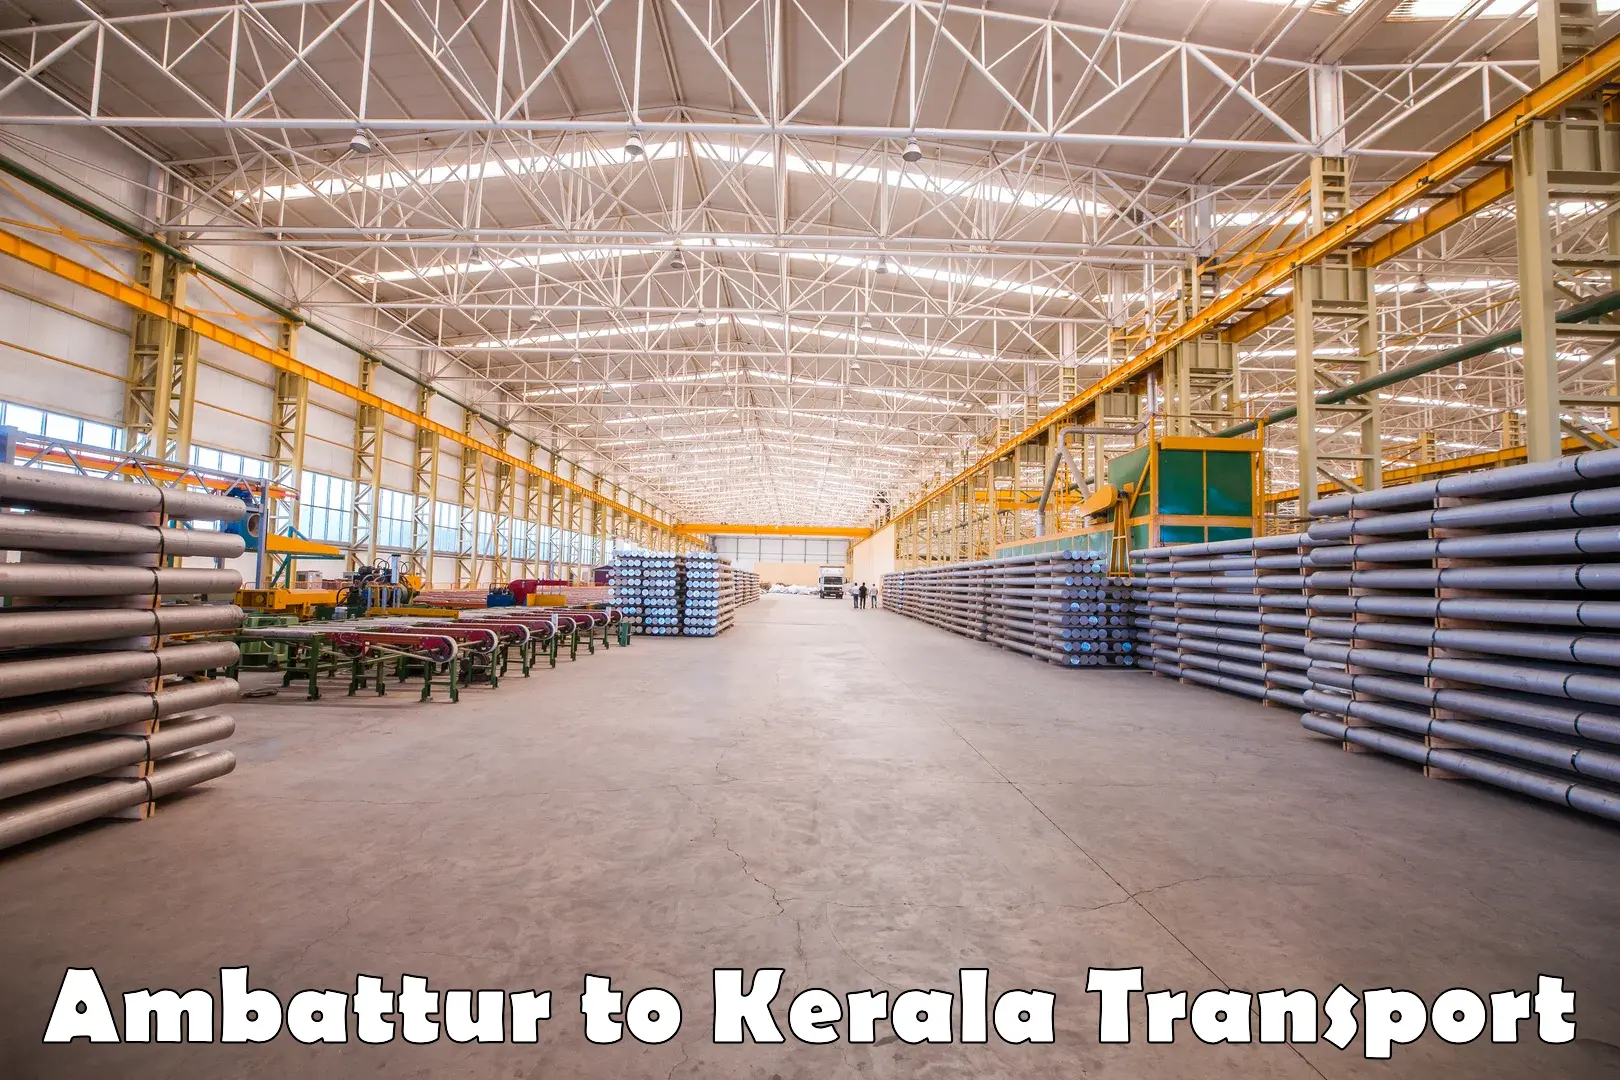 Truck transport companies in India Ambattur to Kalanjoor